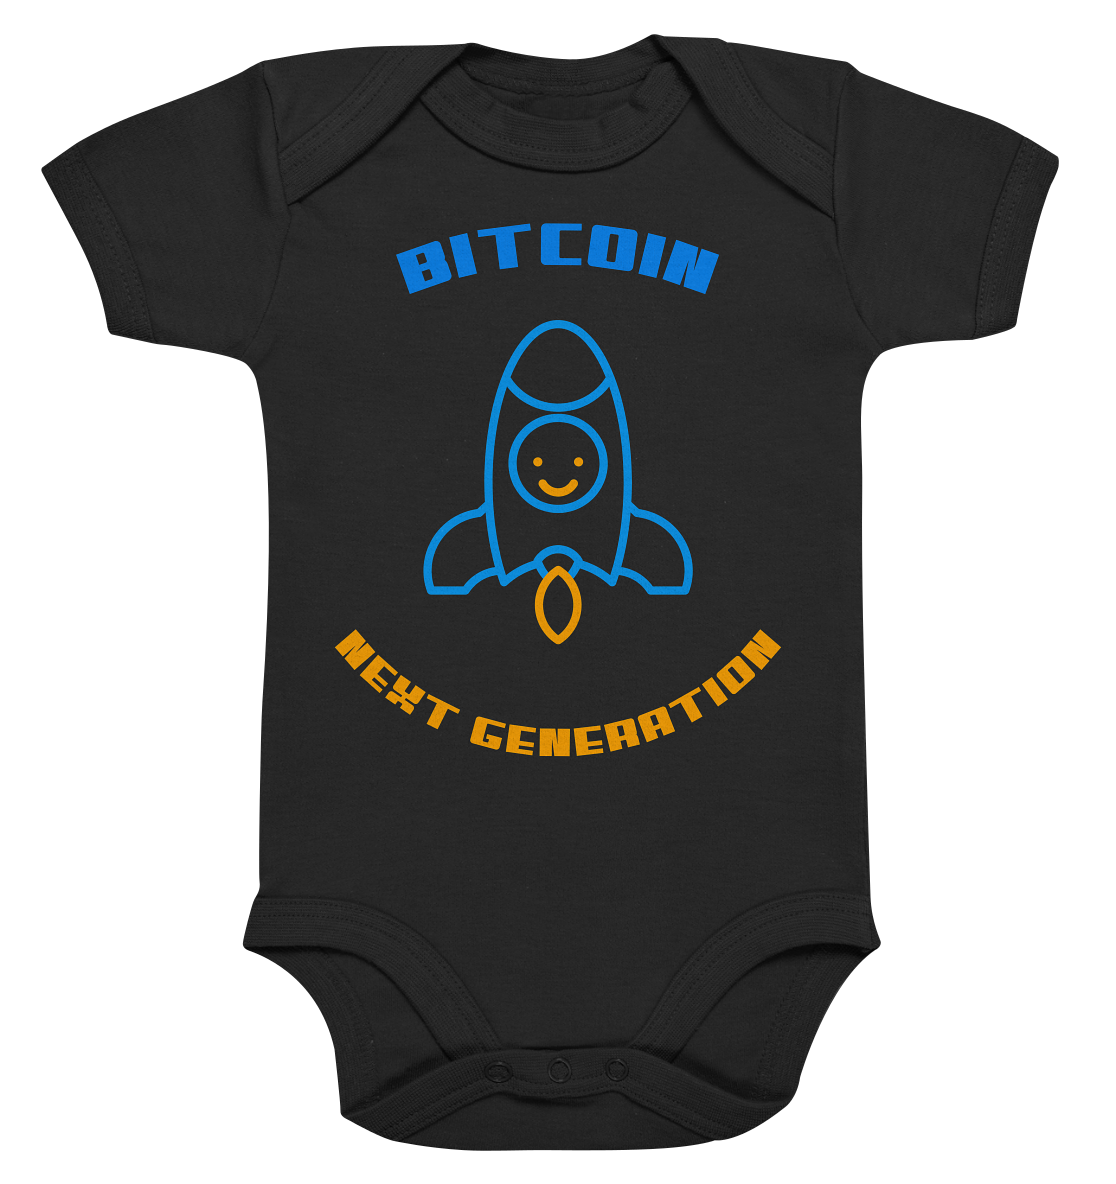 Bitcoin - Next Generation - Organic Baby Bodysuite